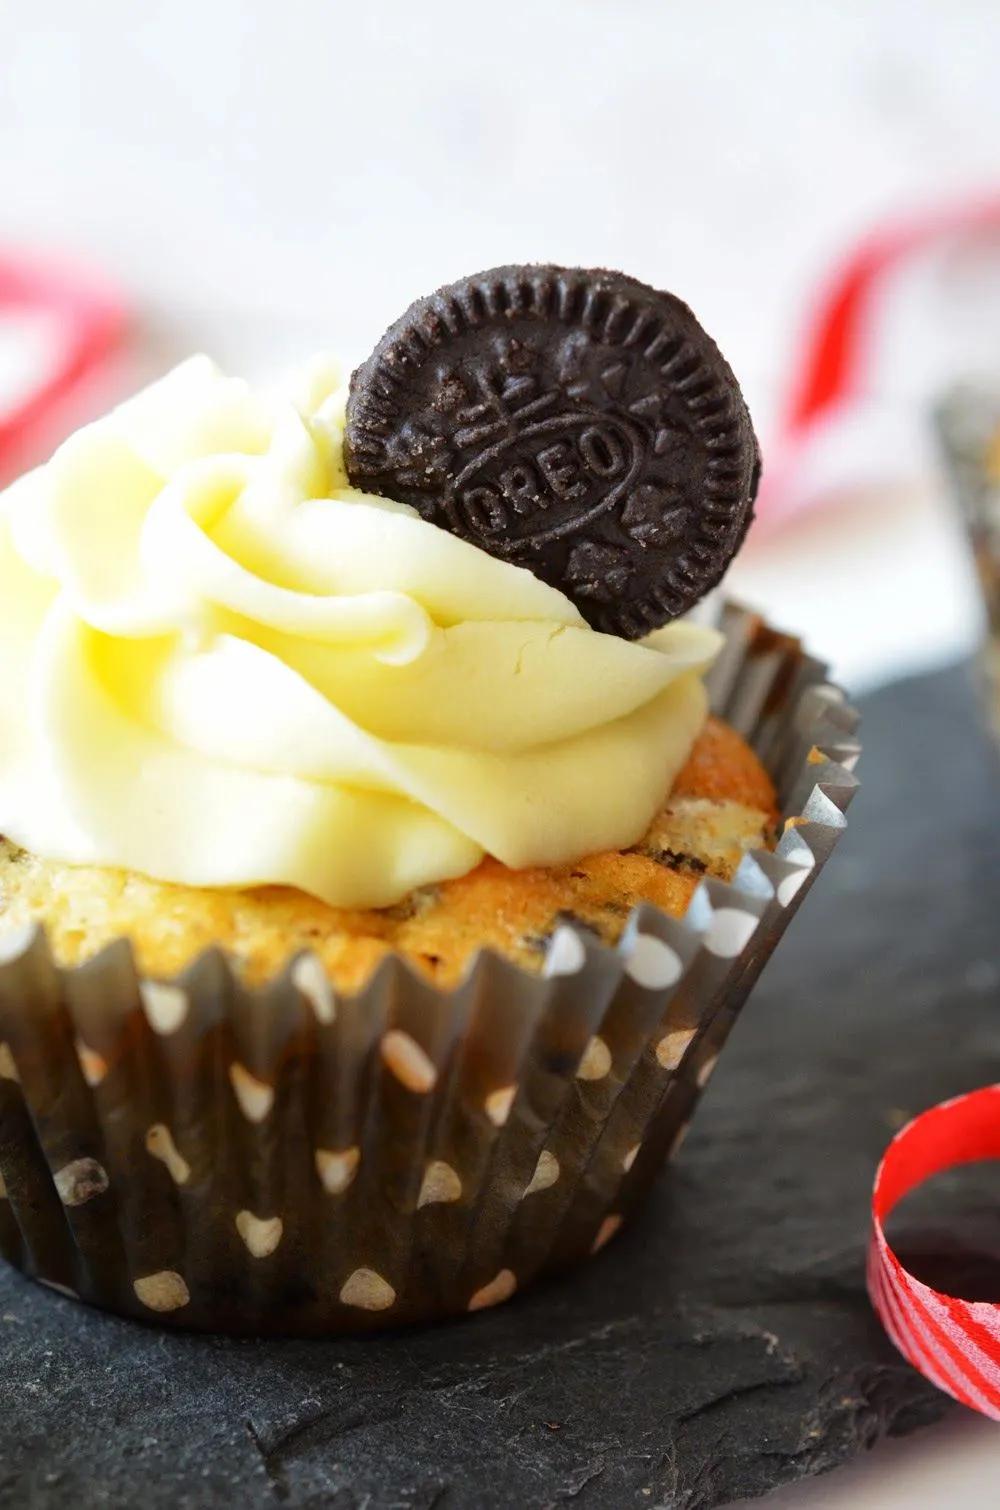 Frosting mit weißer Schokolade | Oreo, Oreo cupcakes, Cupcakes